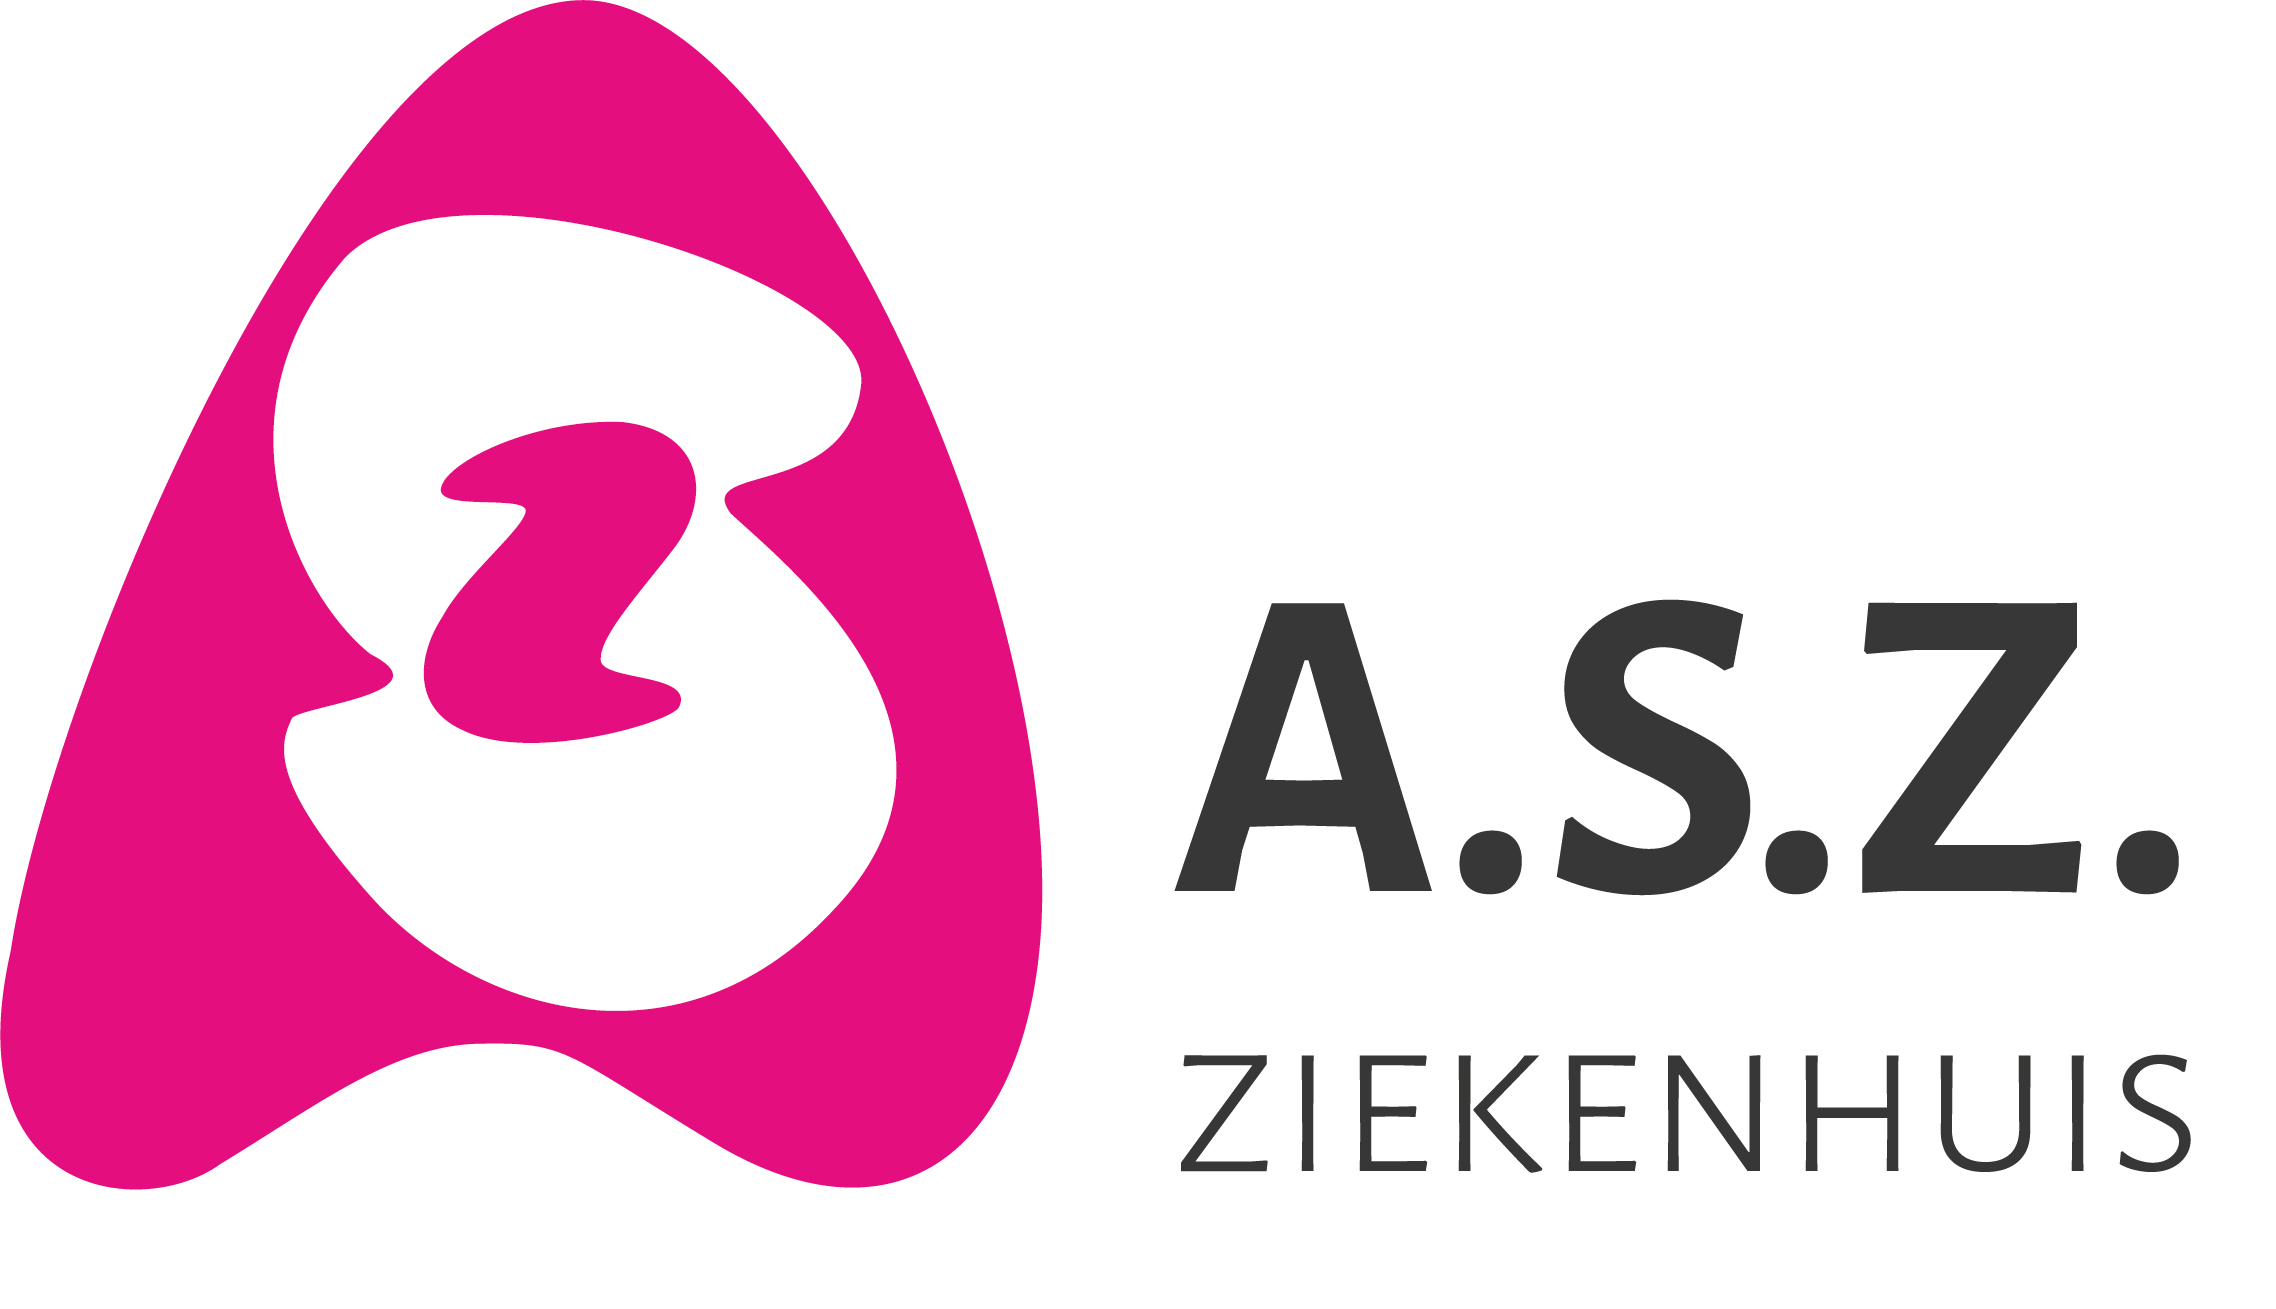 Asz logo